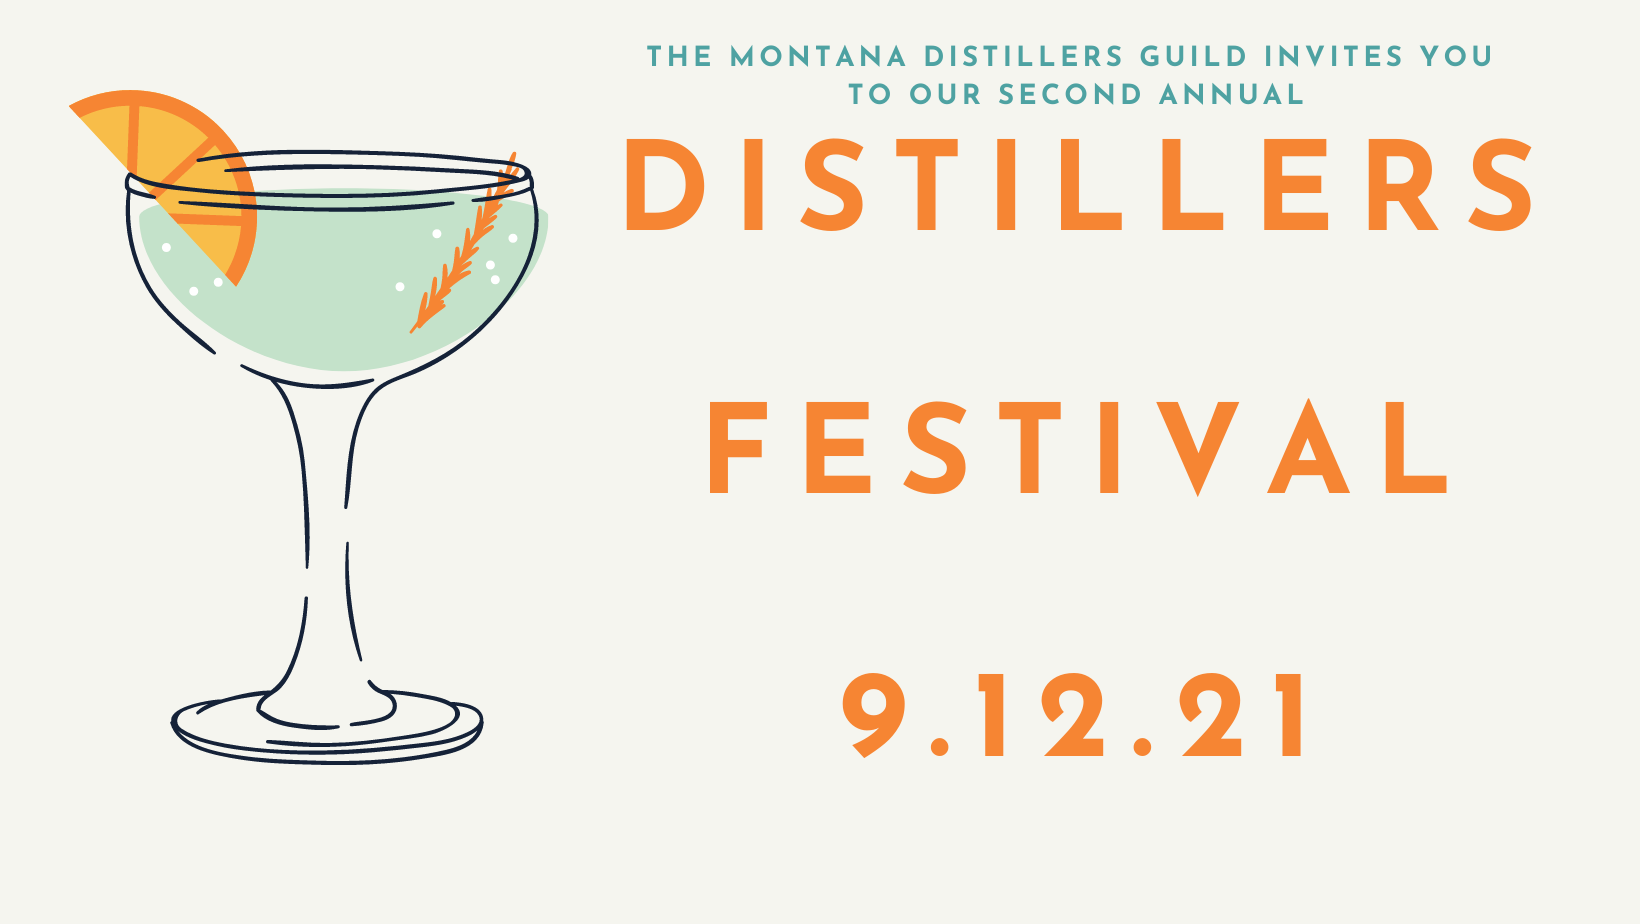 2nd Annual Distillers Fest - Sunday, September 12 at Caras Park in Missoula, Montana